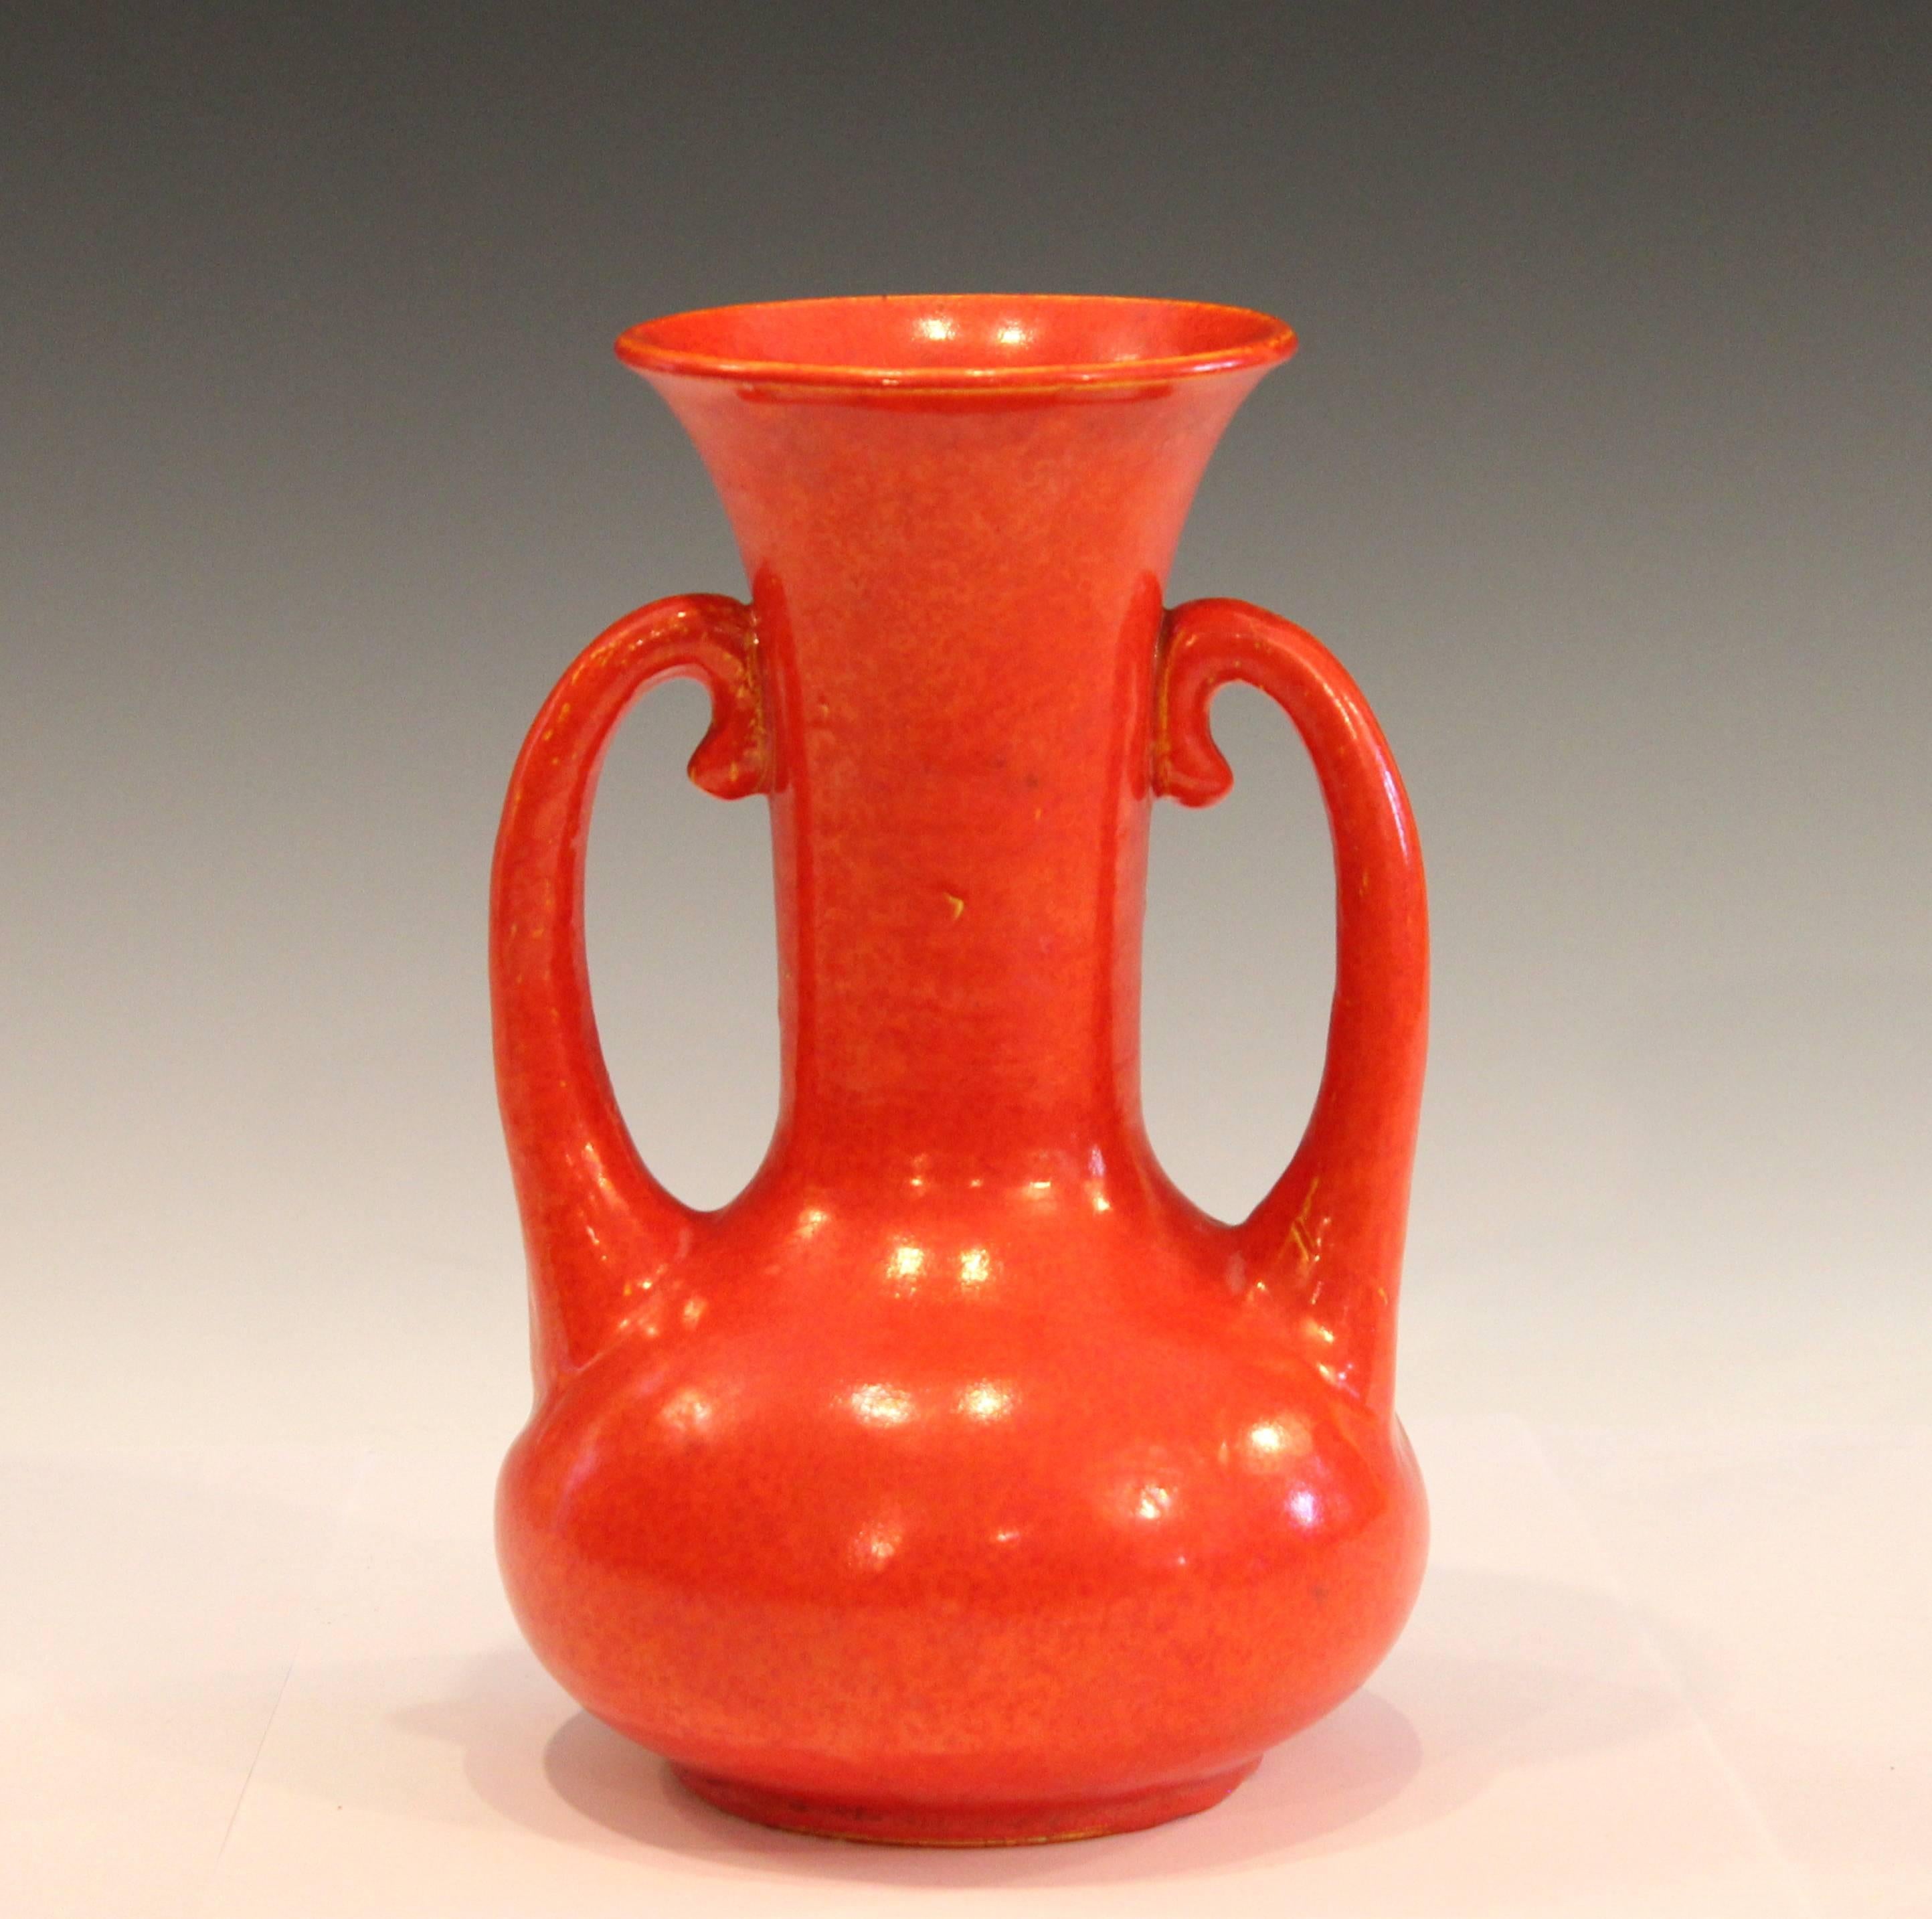 20th Century Awaji Pottery Orange Art Deco Japanese Vintage Crystalline Atomic Glaze Vase For Sale